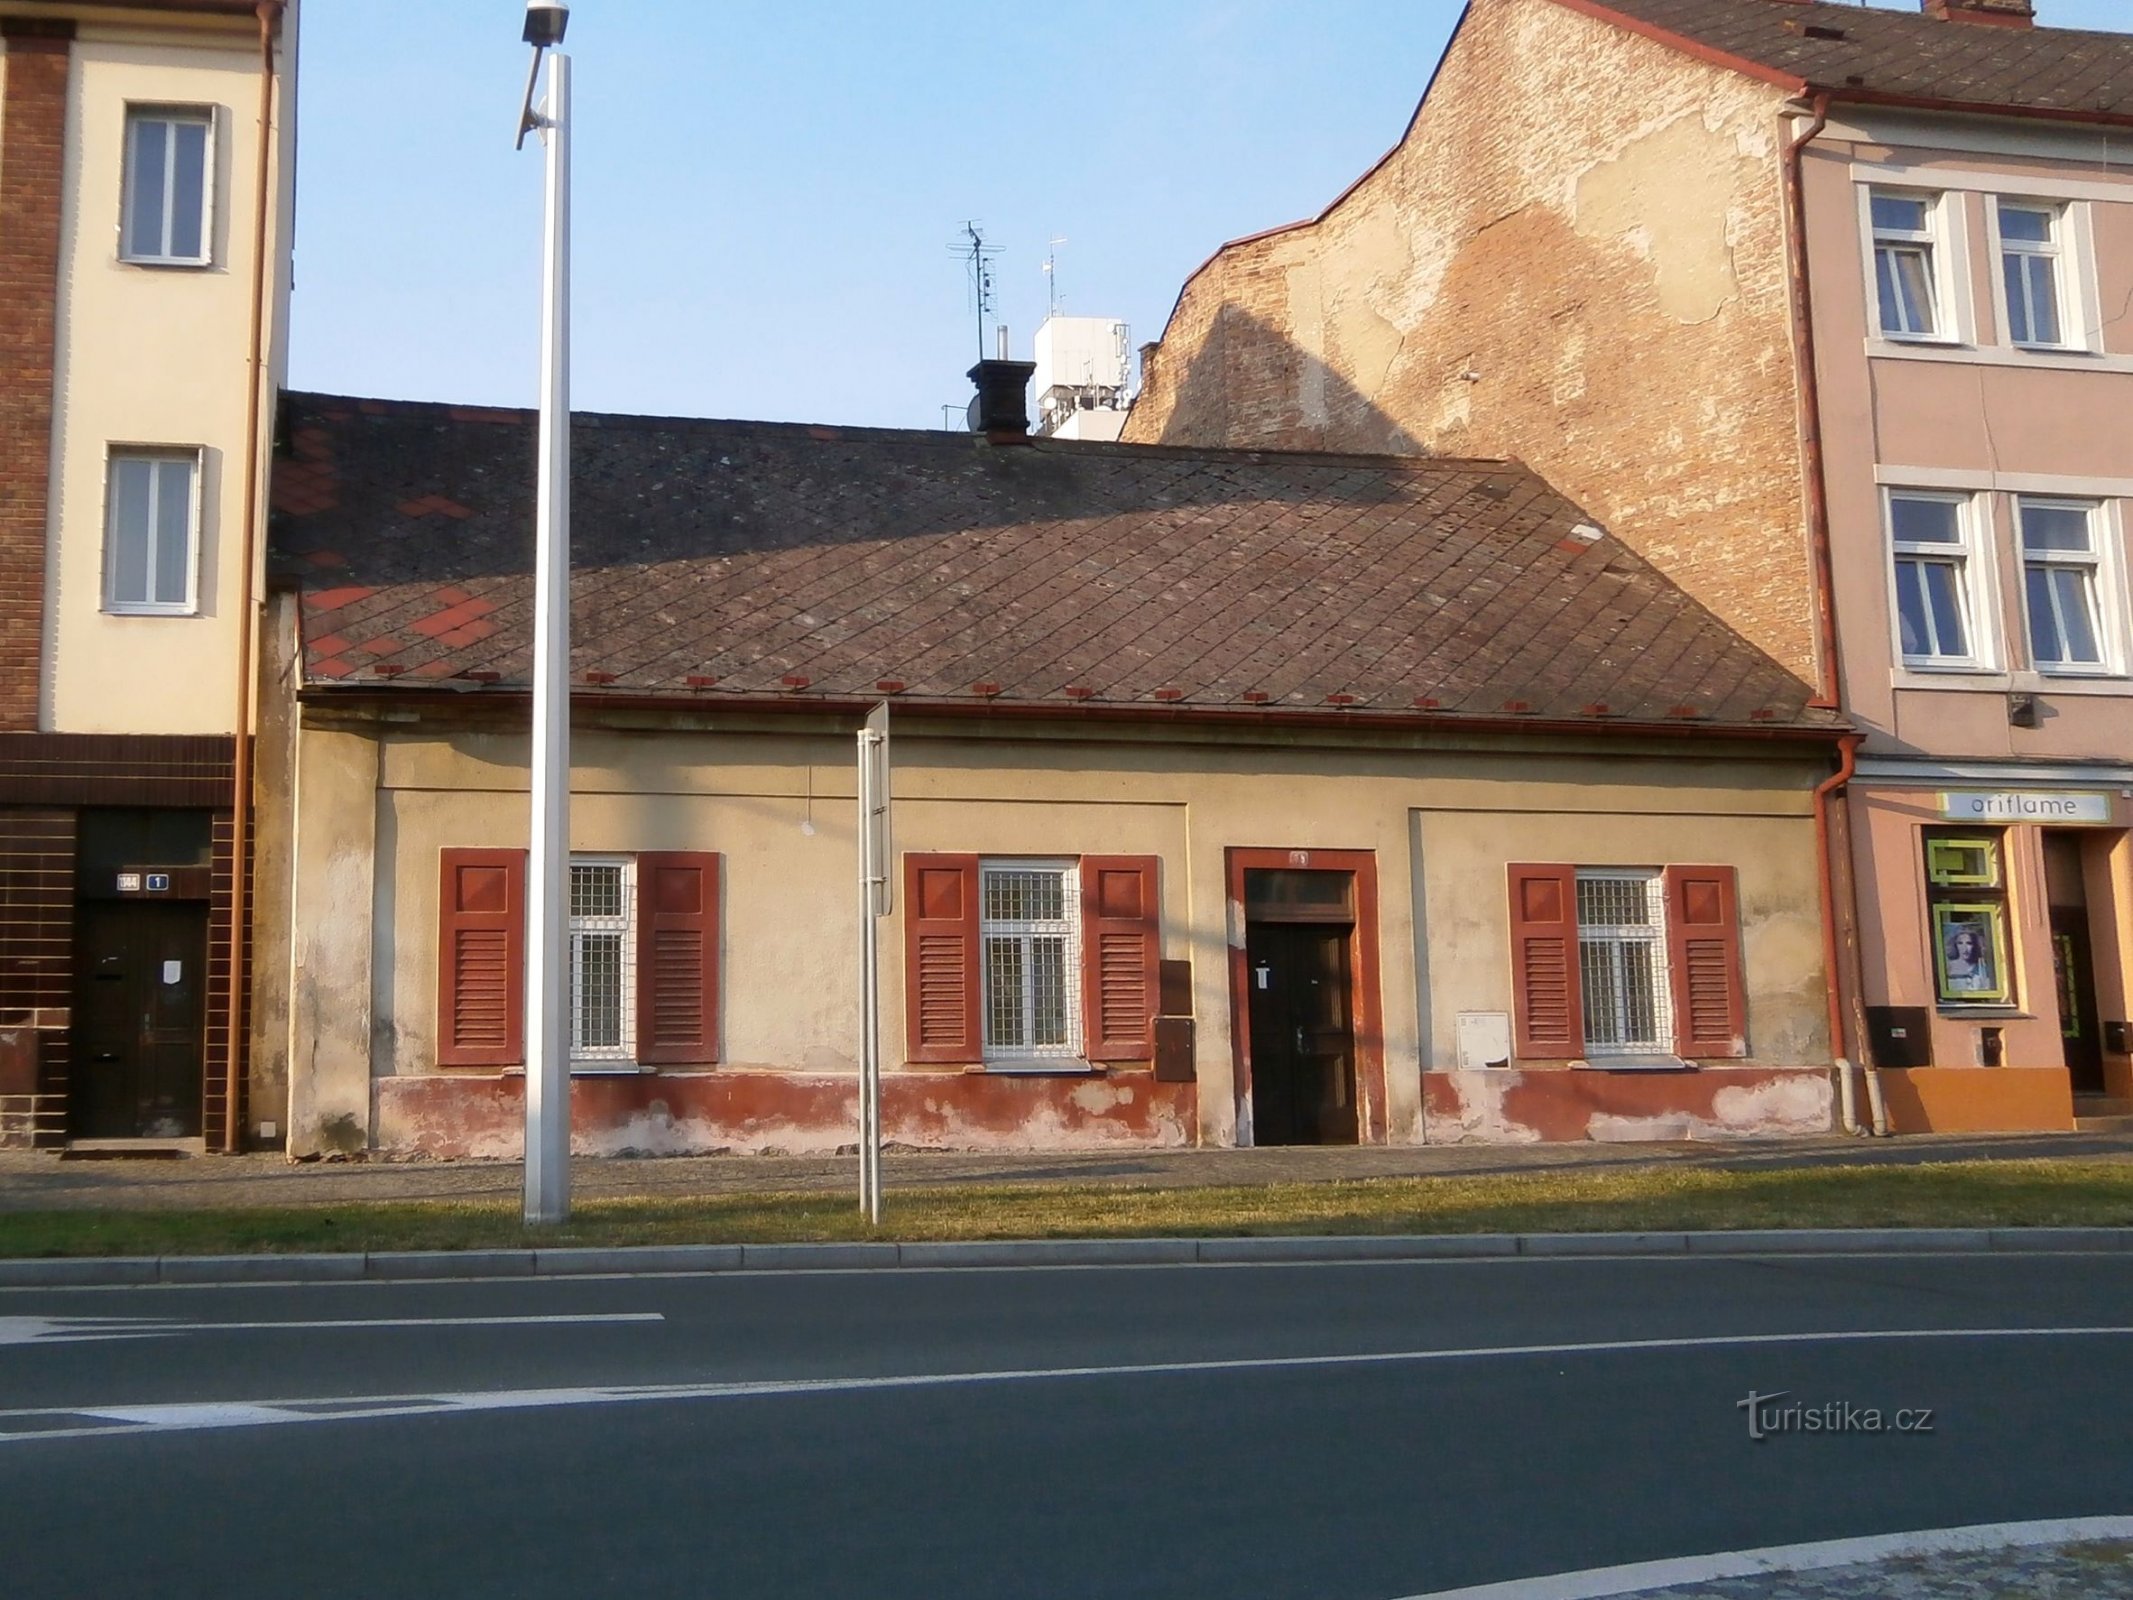 Station No. 78 (Hradec Králové, 27.7.2014/XNUMX/XNUMX)